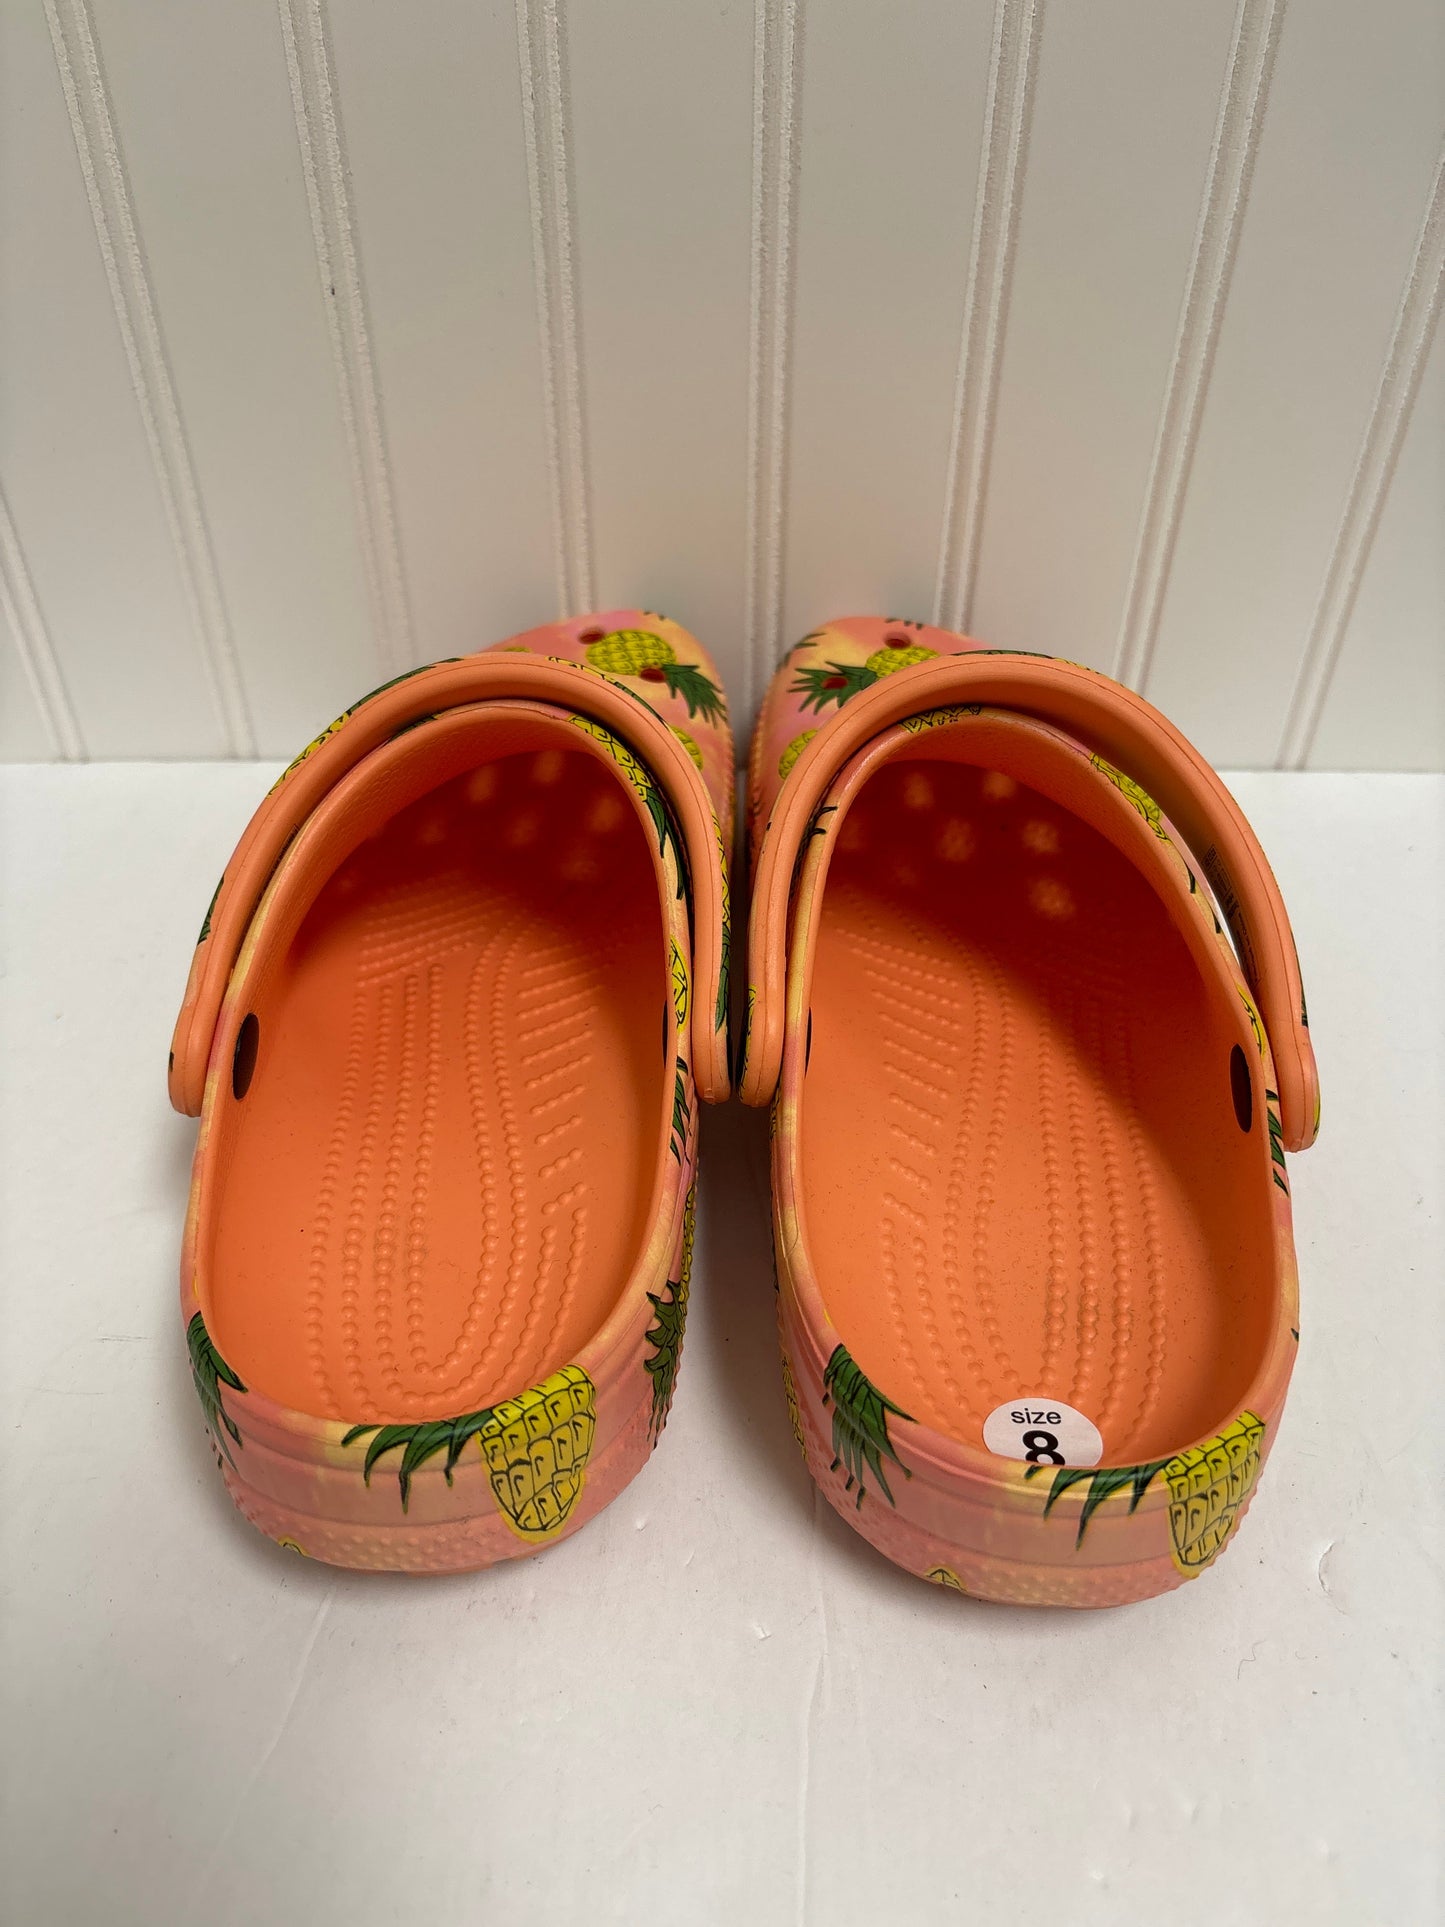 Orange Shoes Flats Crocs, Size 8